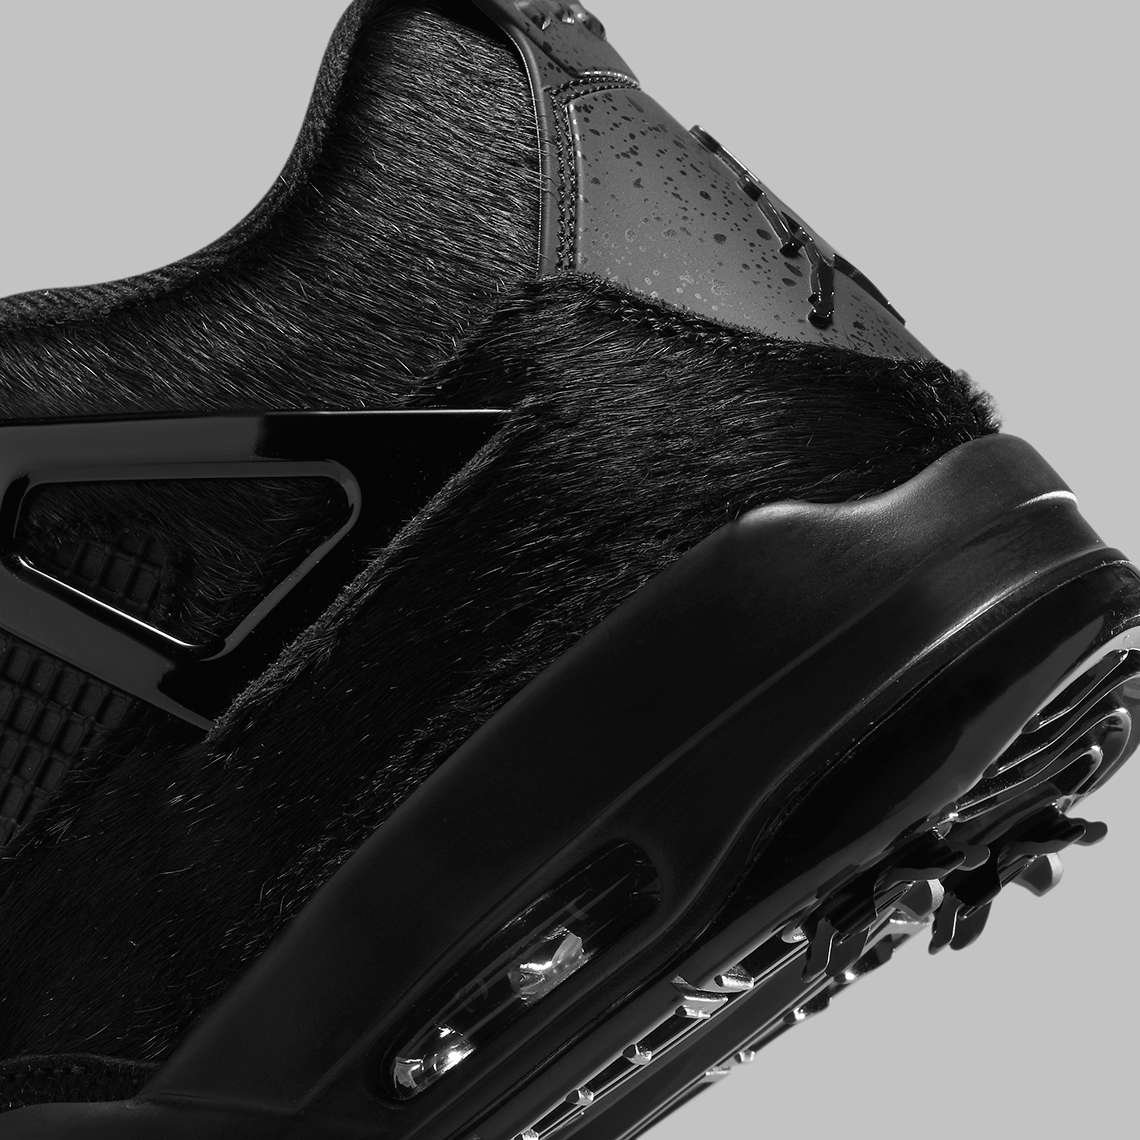 Air Jordan 4 Golf Black Cat CU9981-001 Release | SneakerNews.com